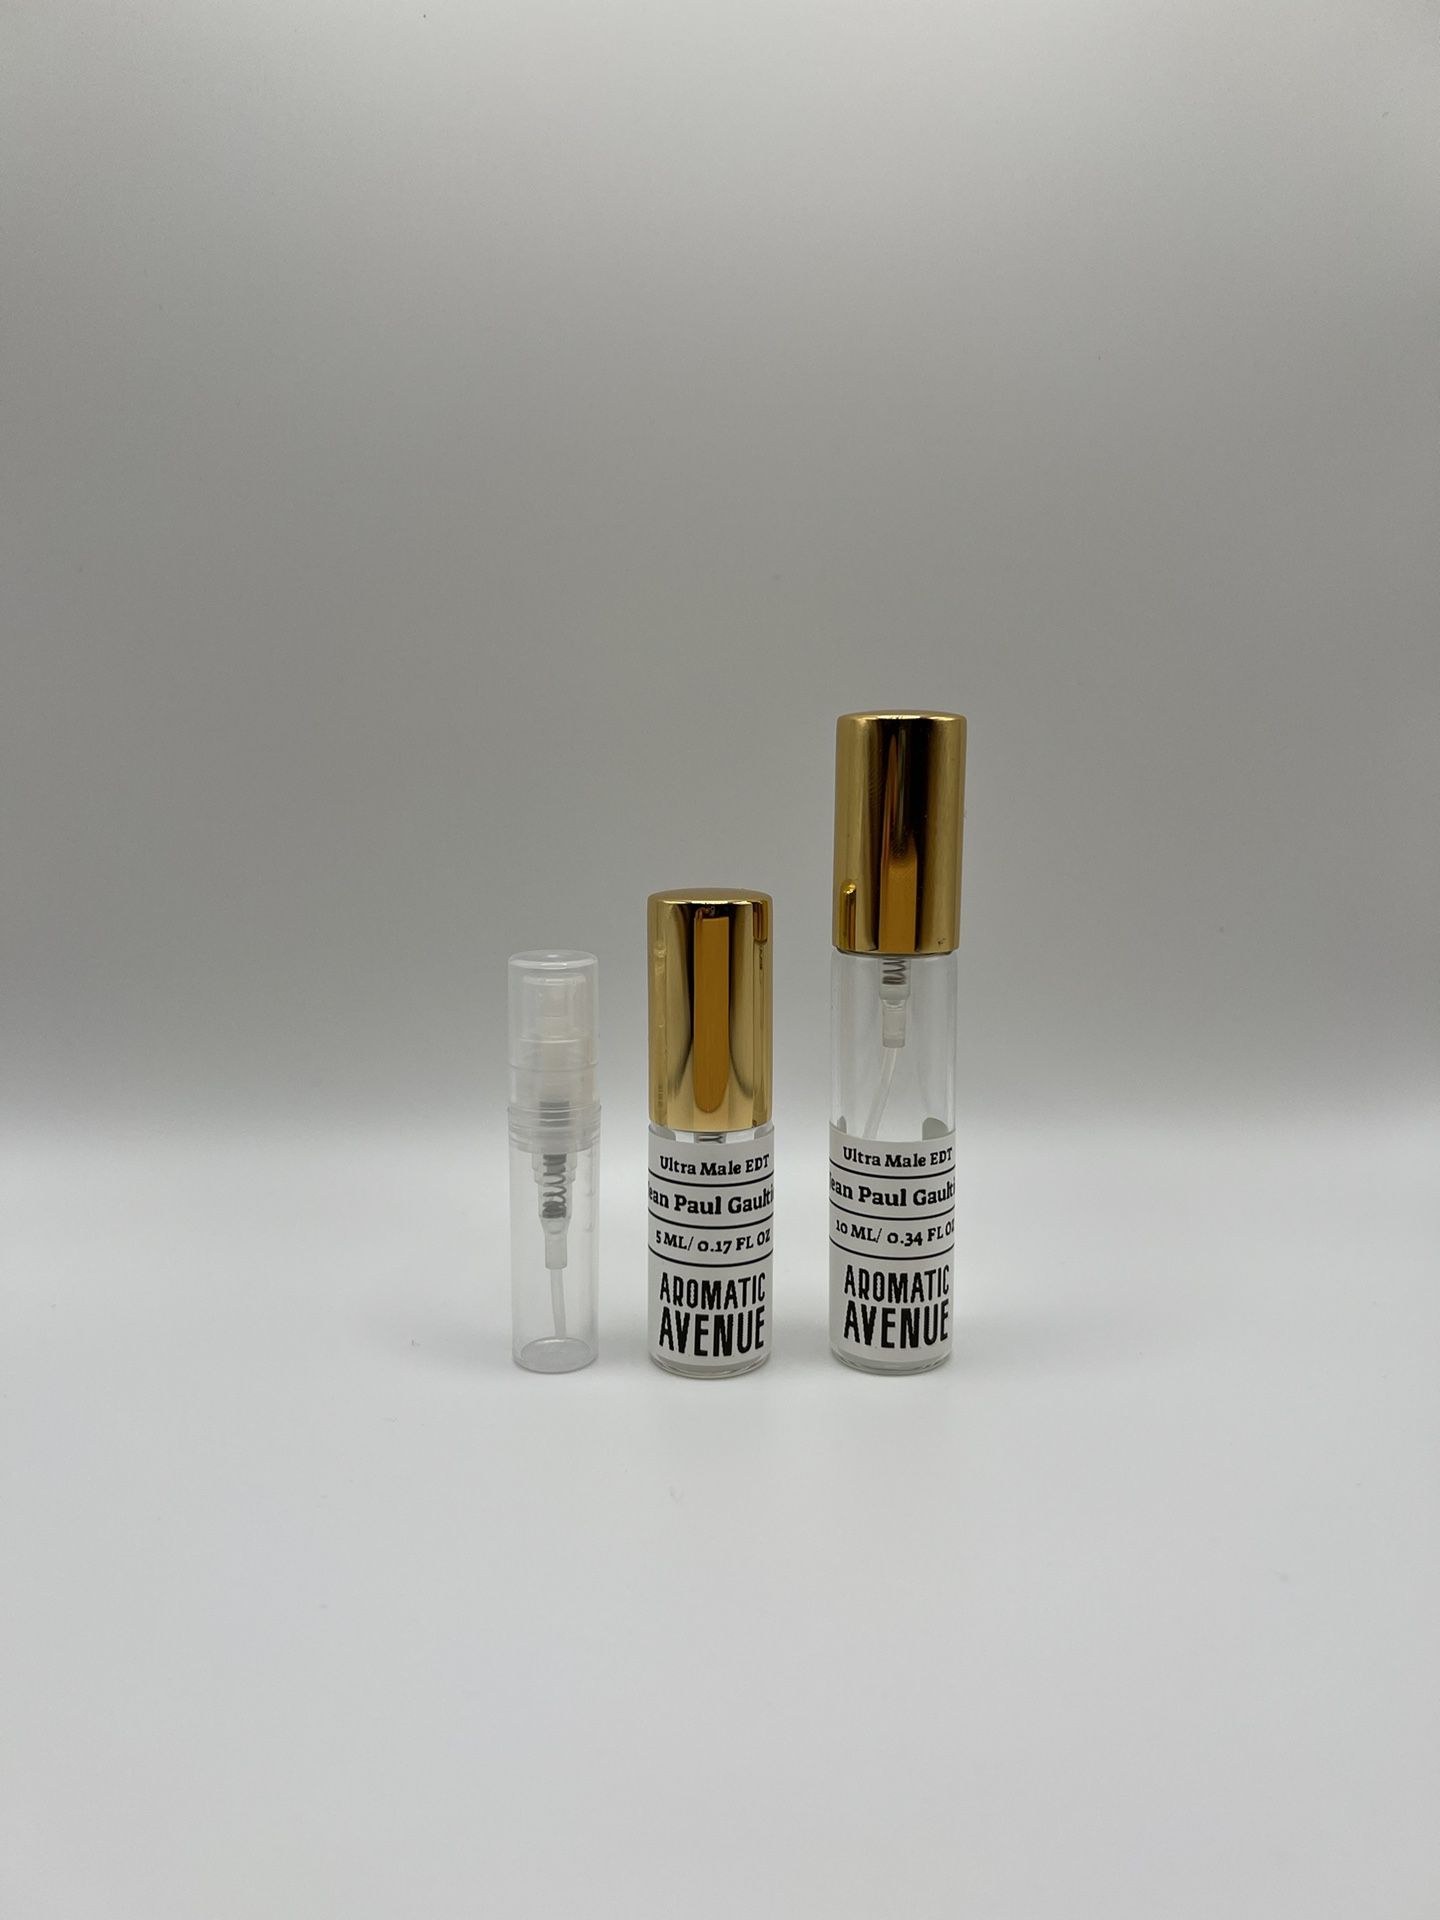 Jean Paul Gaultier Le Male EDT Fragrance Glass Decanter Sample Spray Travel Size Vial 10ML